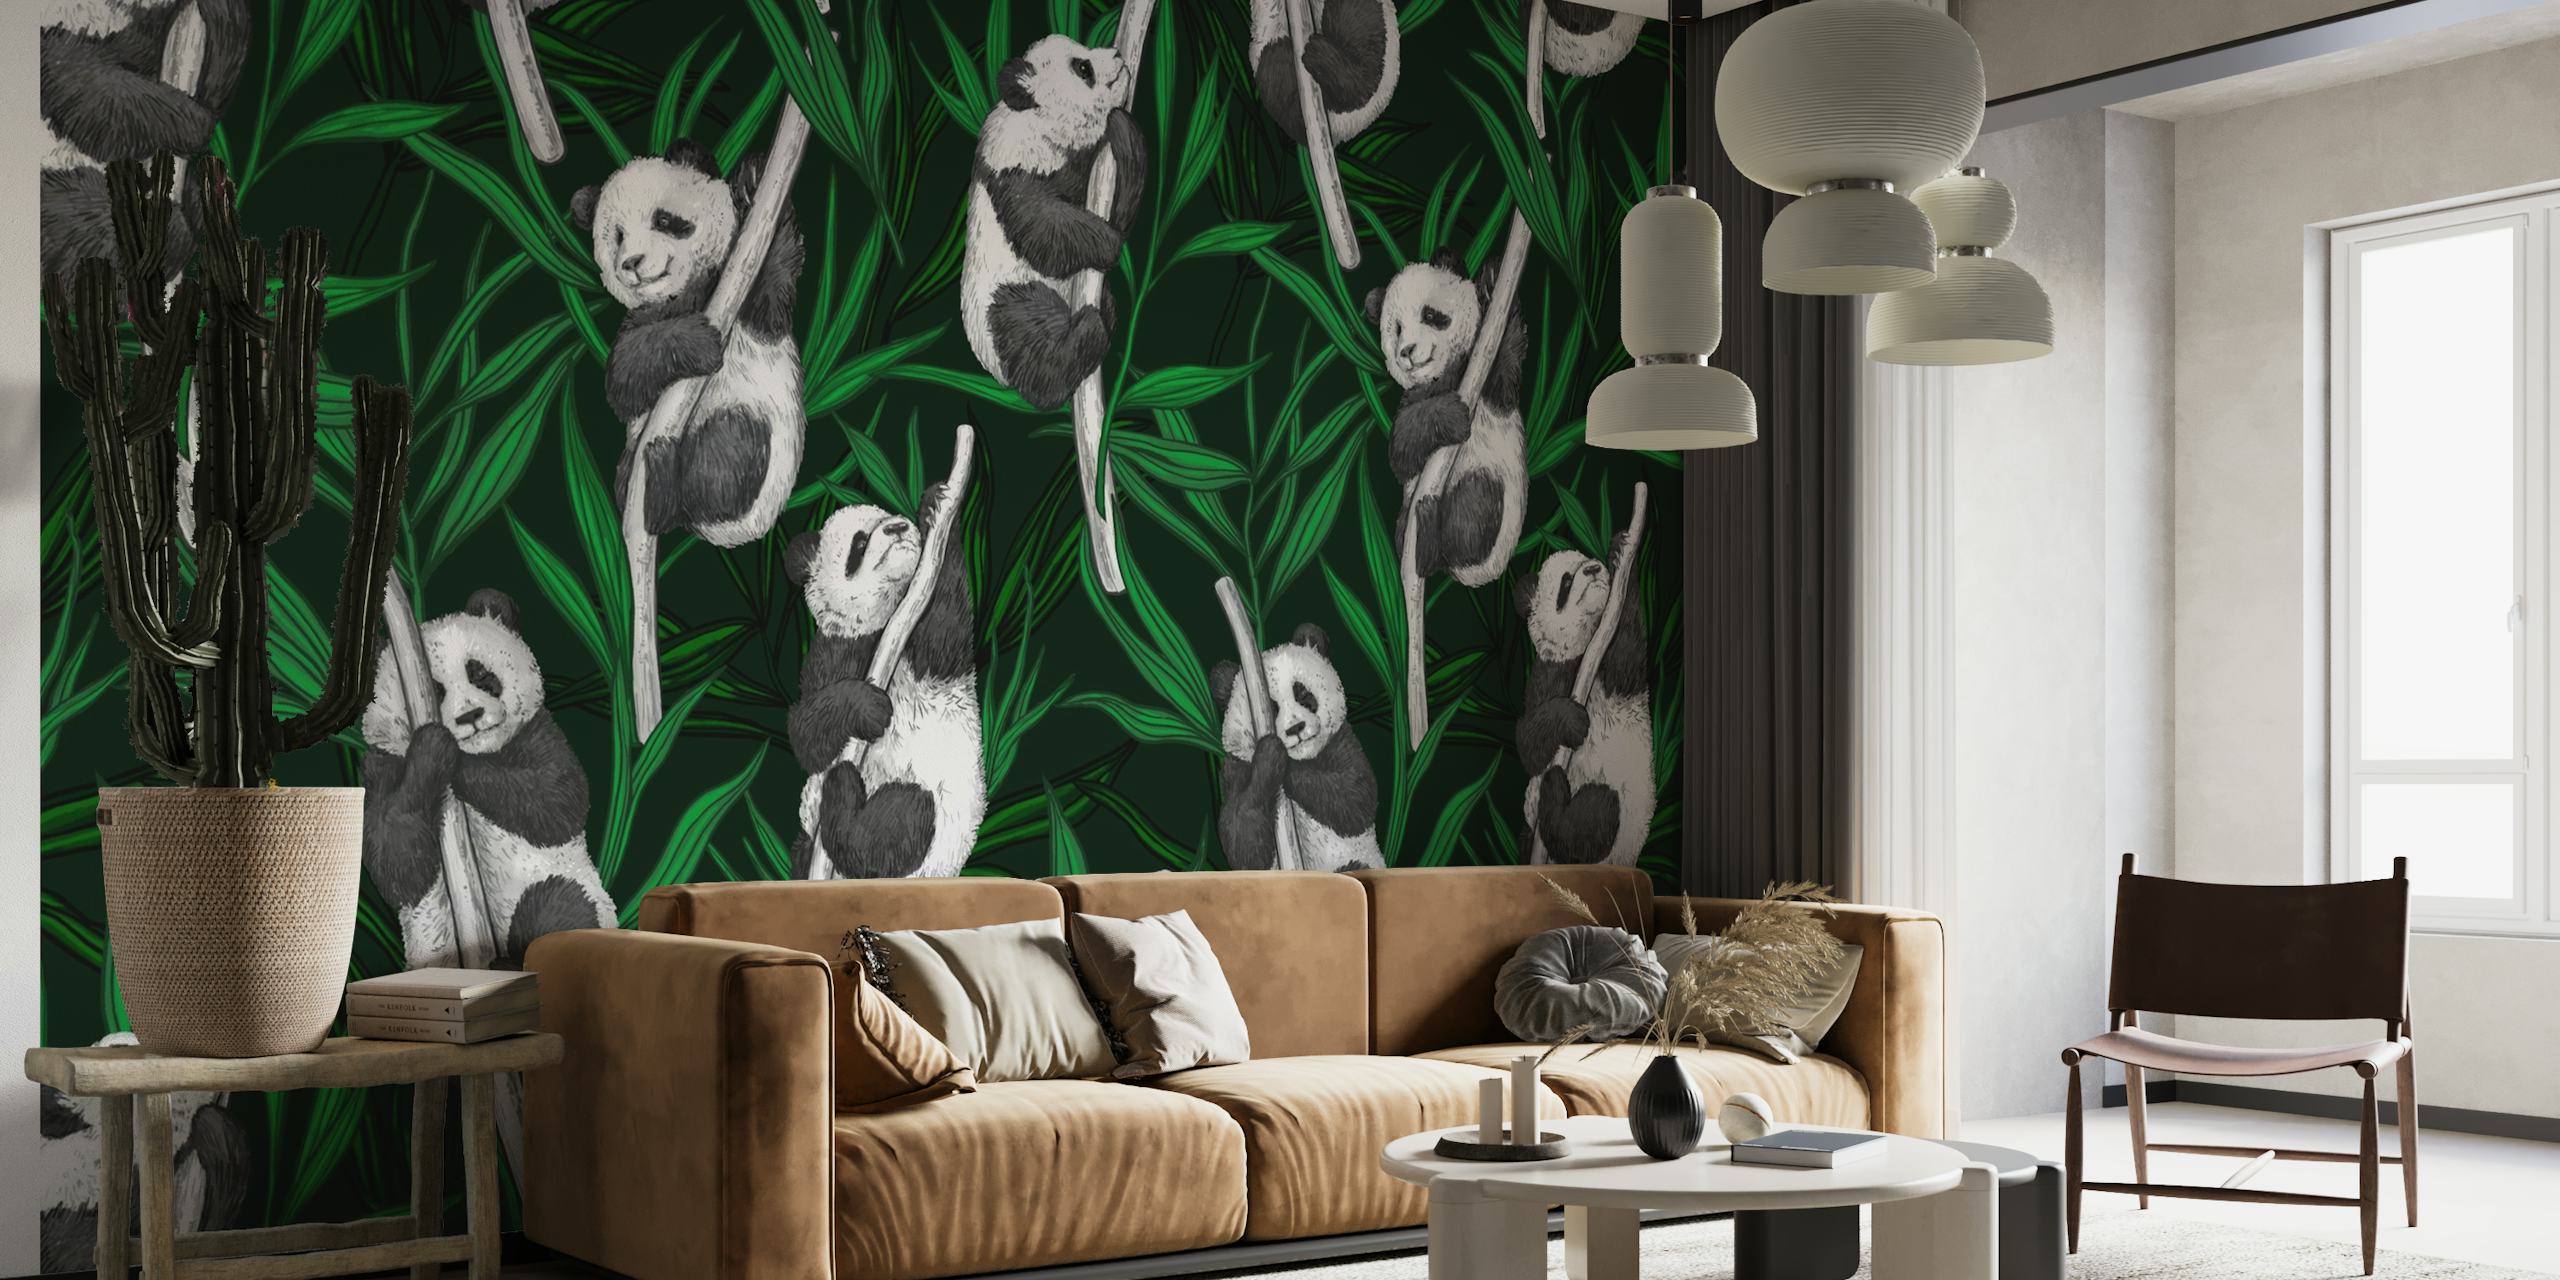 Panda cubs 3 wallpaper